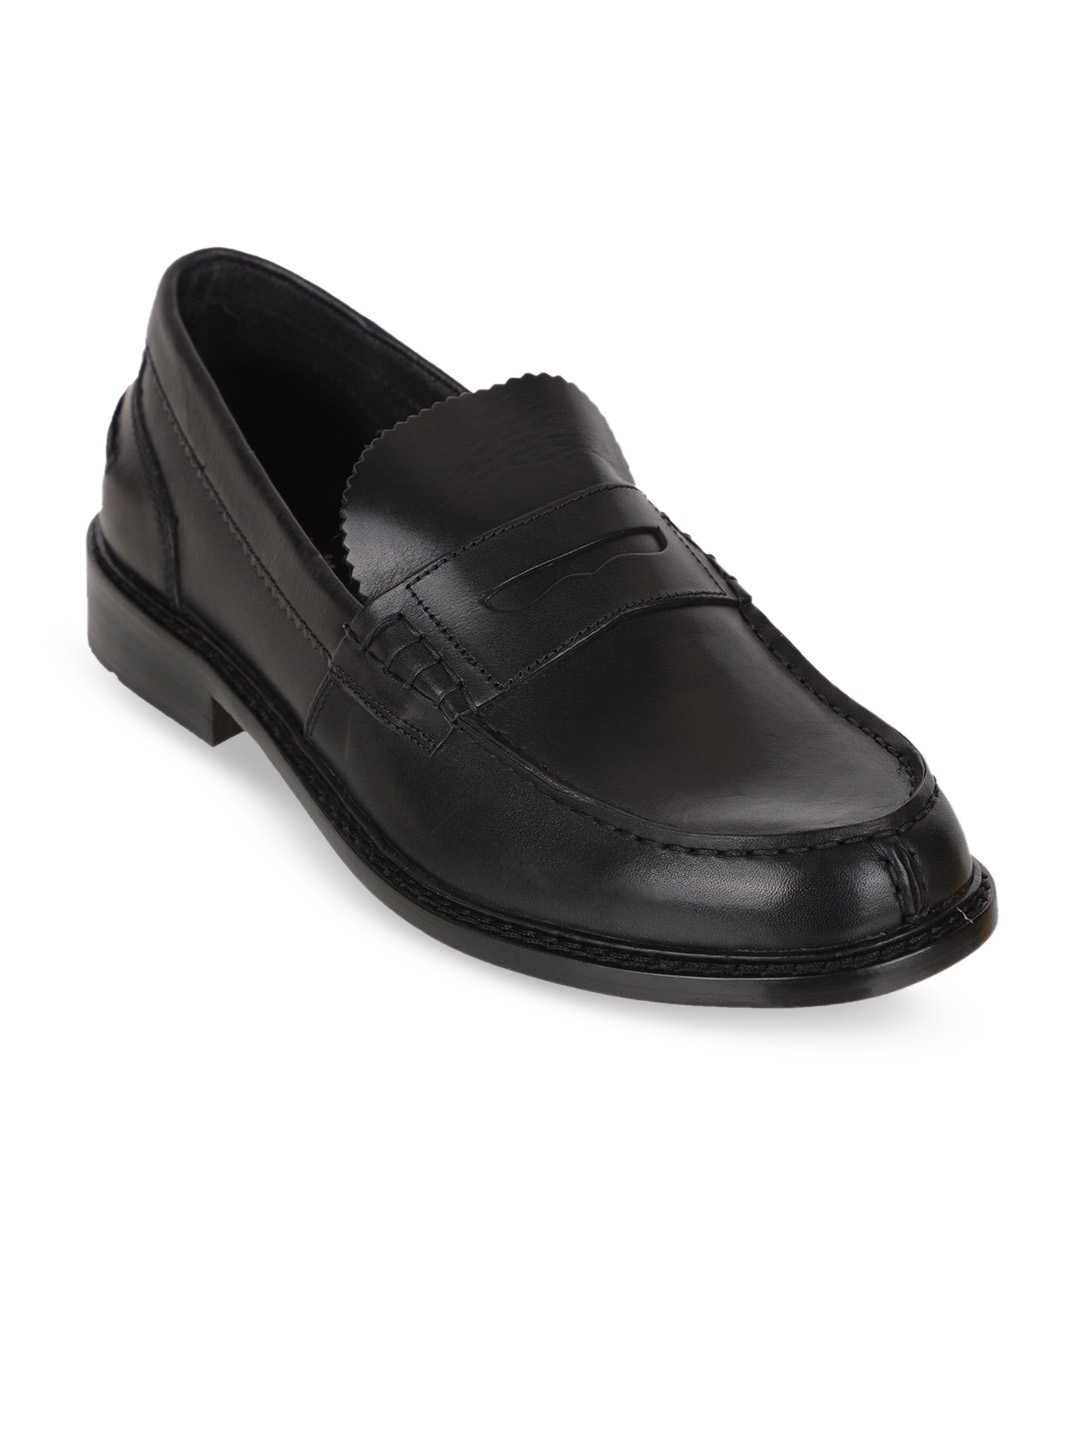 Buy Clarks Men Black Solid Leather Formal Loafers - Formal Shoes for ...